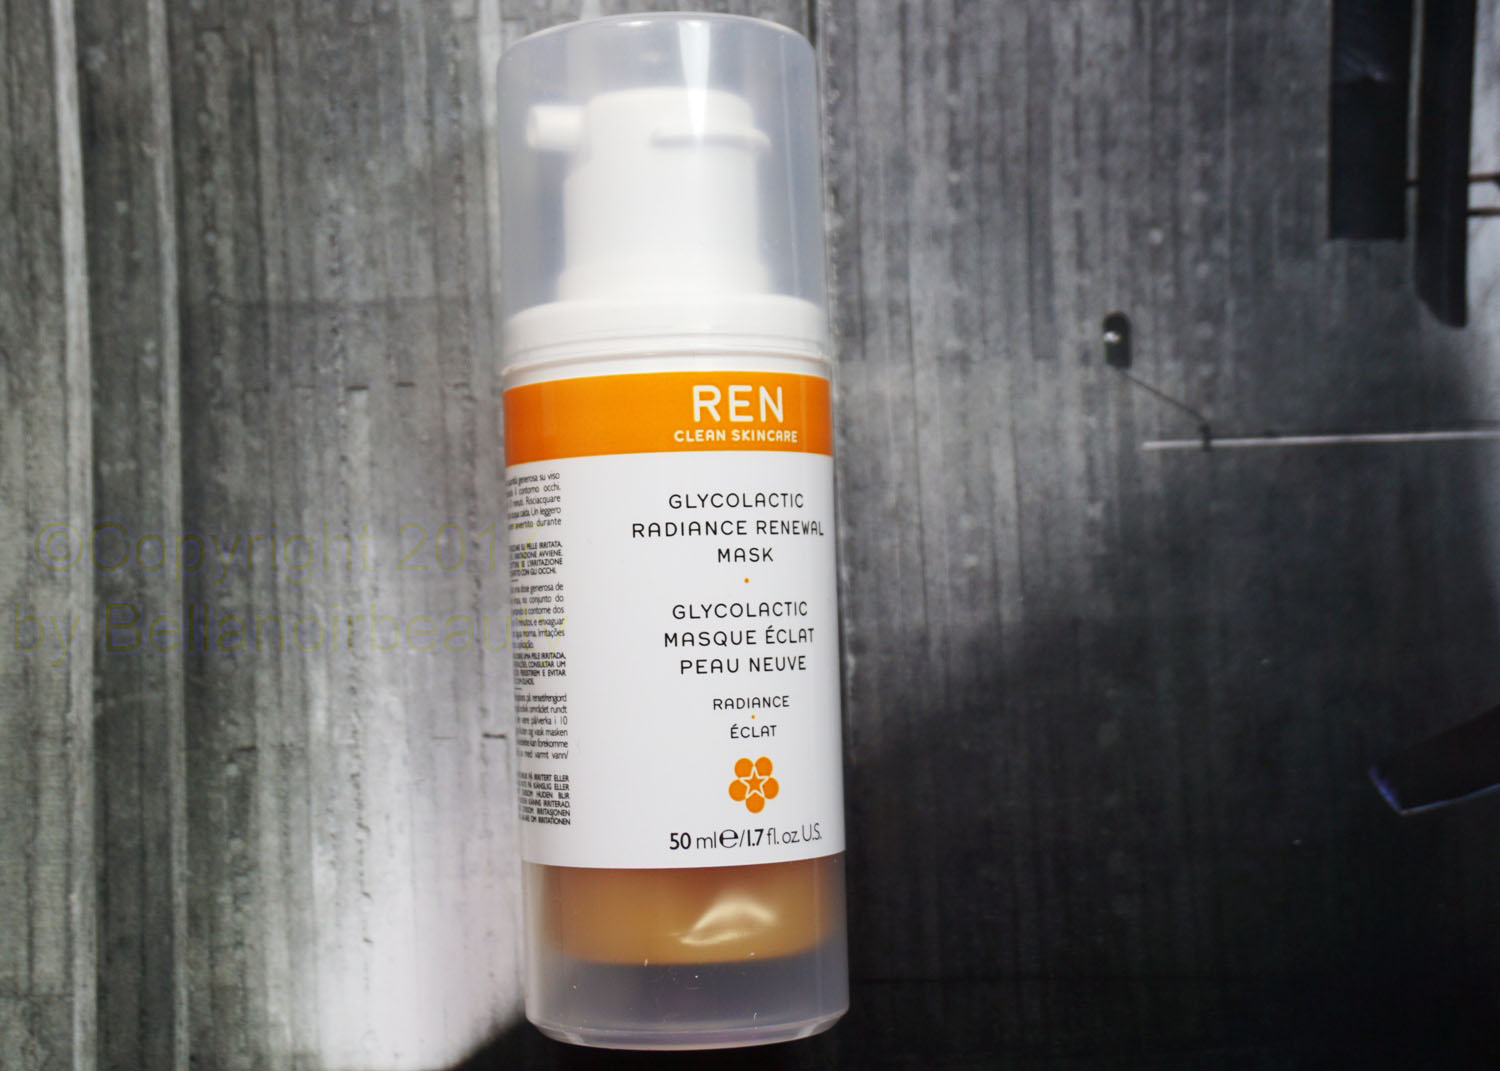 Ren GlycoLactic Radiance Renewal Mask | bellanoirbeauty.com